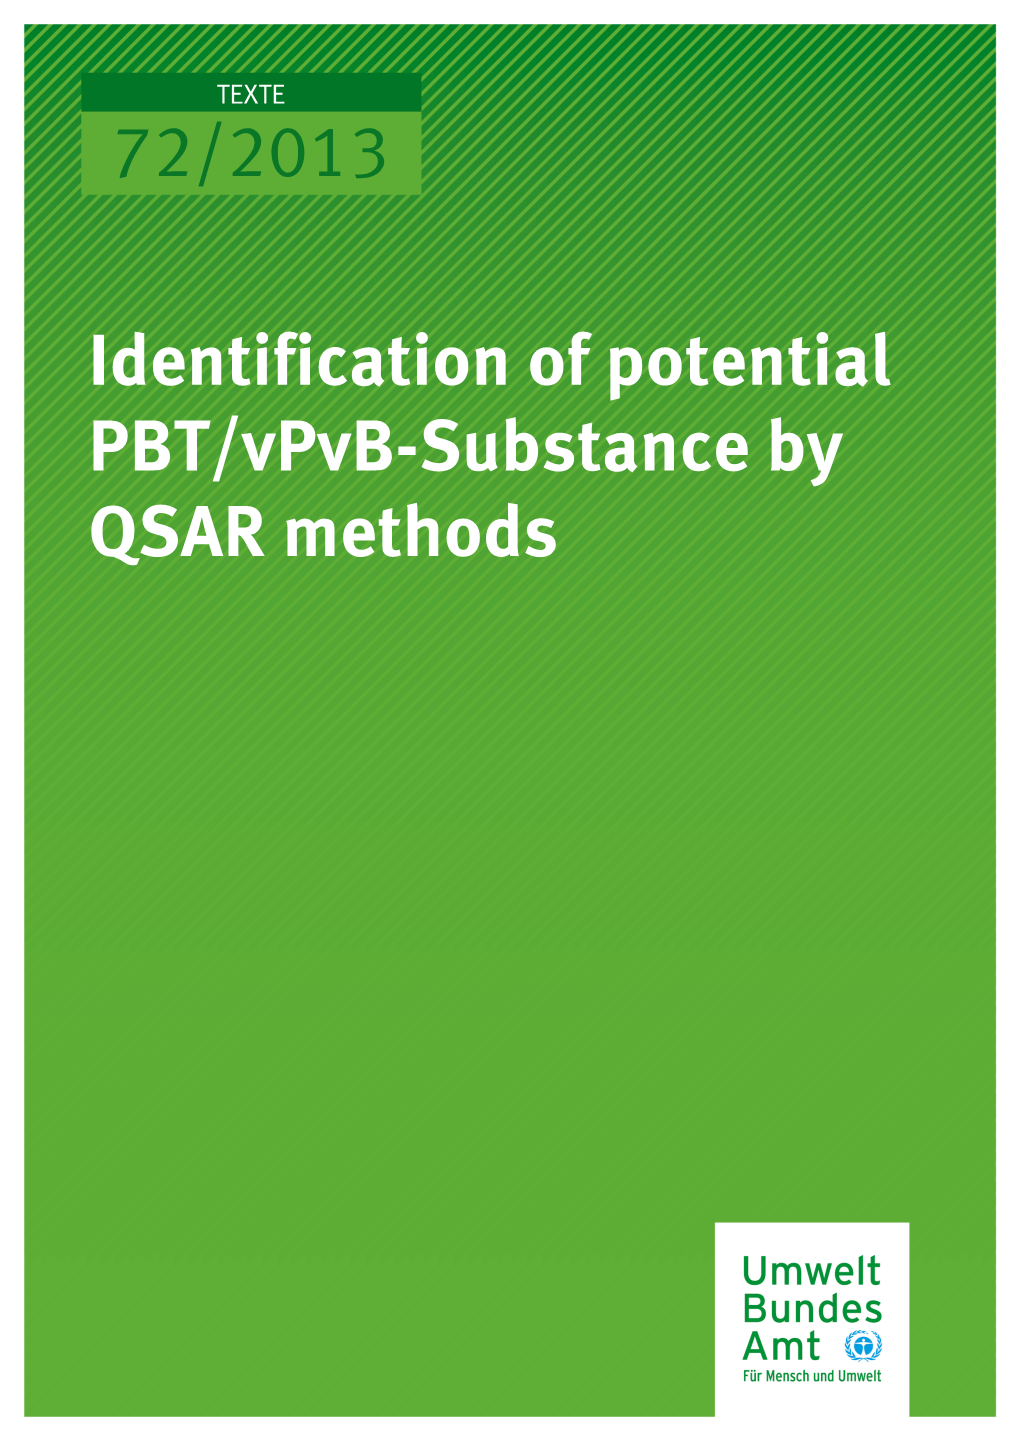 Identification of Potential PBT/Vpvb-Substances by QSAR